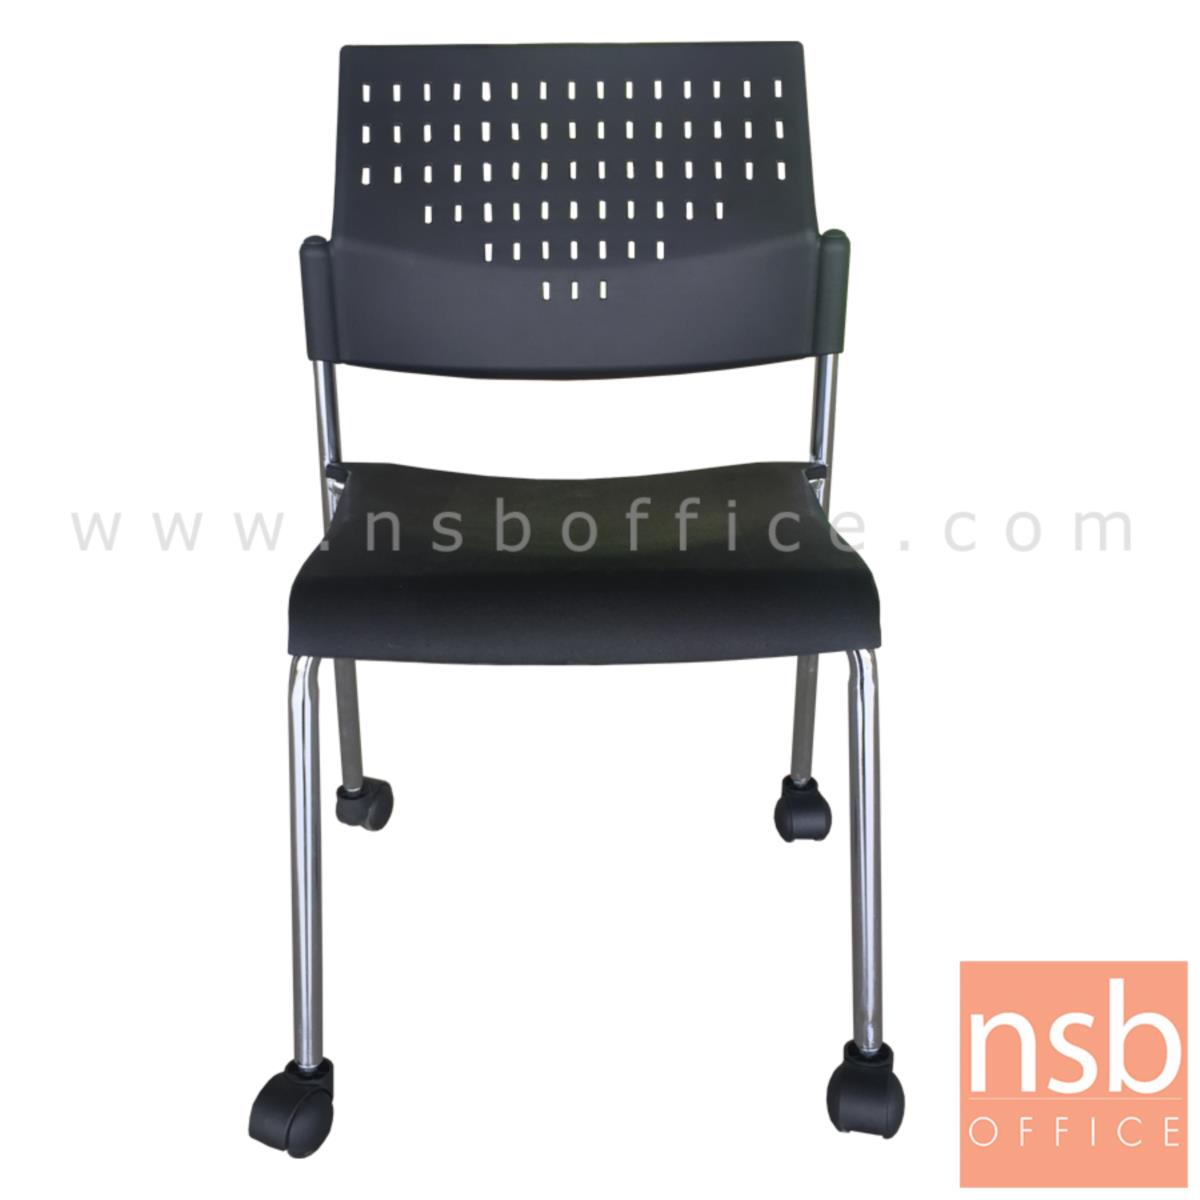 B29A054:เก้าอี้อเนกประสงค์เฟรมโพลี่ รุ่น Steelbeak (สตีลบีค)  ขาเหล็กชุบโครเมี่ยม ล้อเลื่อน